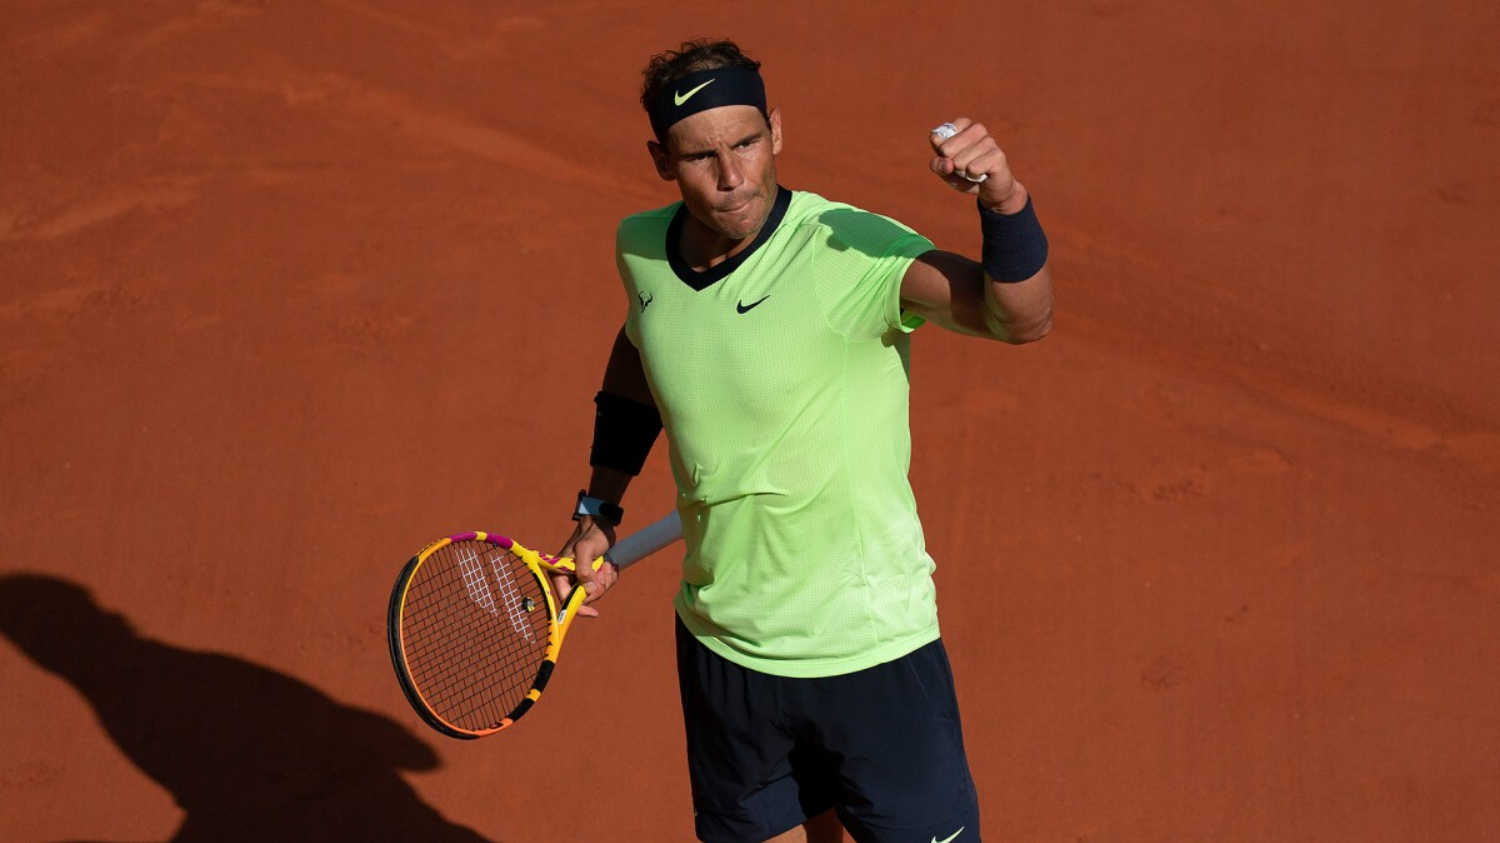 Rafal Nadal drops set, beats Schwartzman to reach French Open semifinal